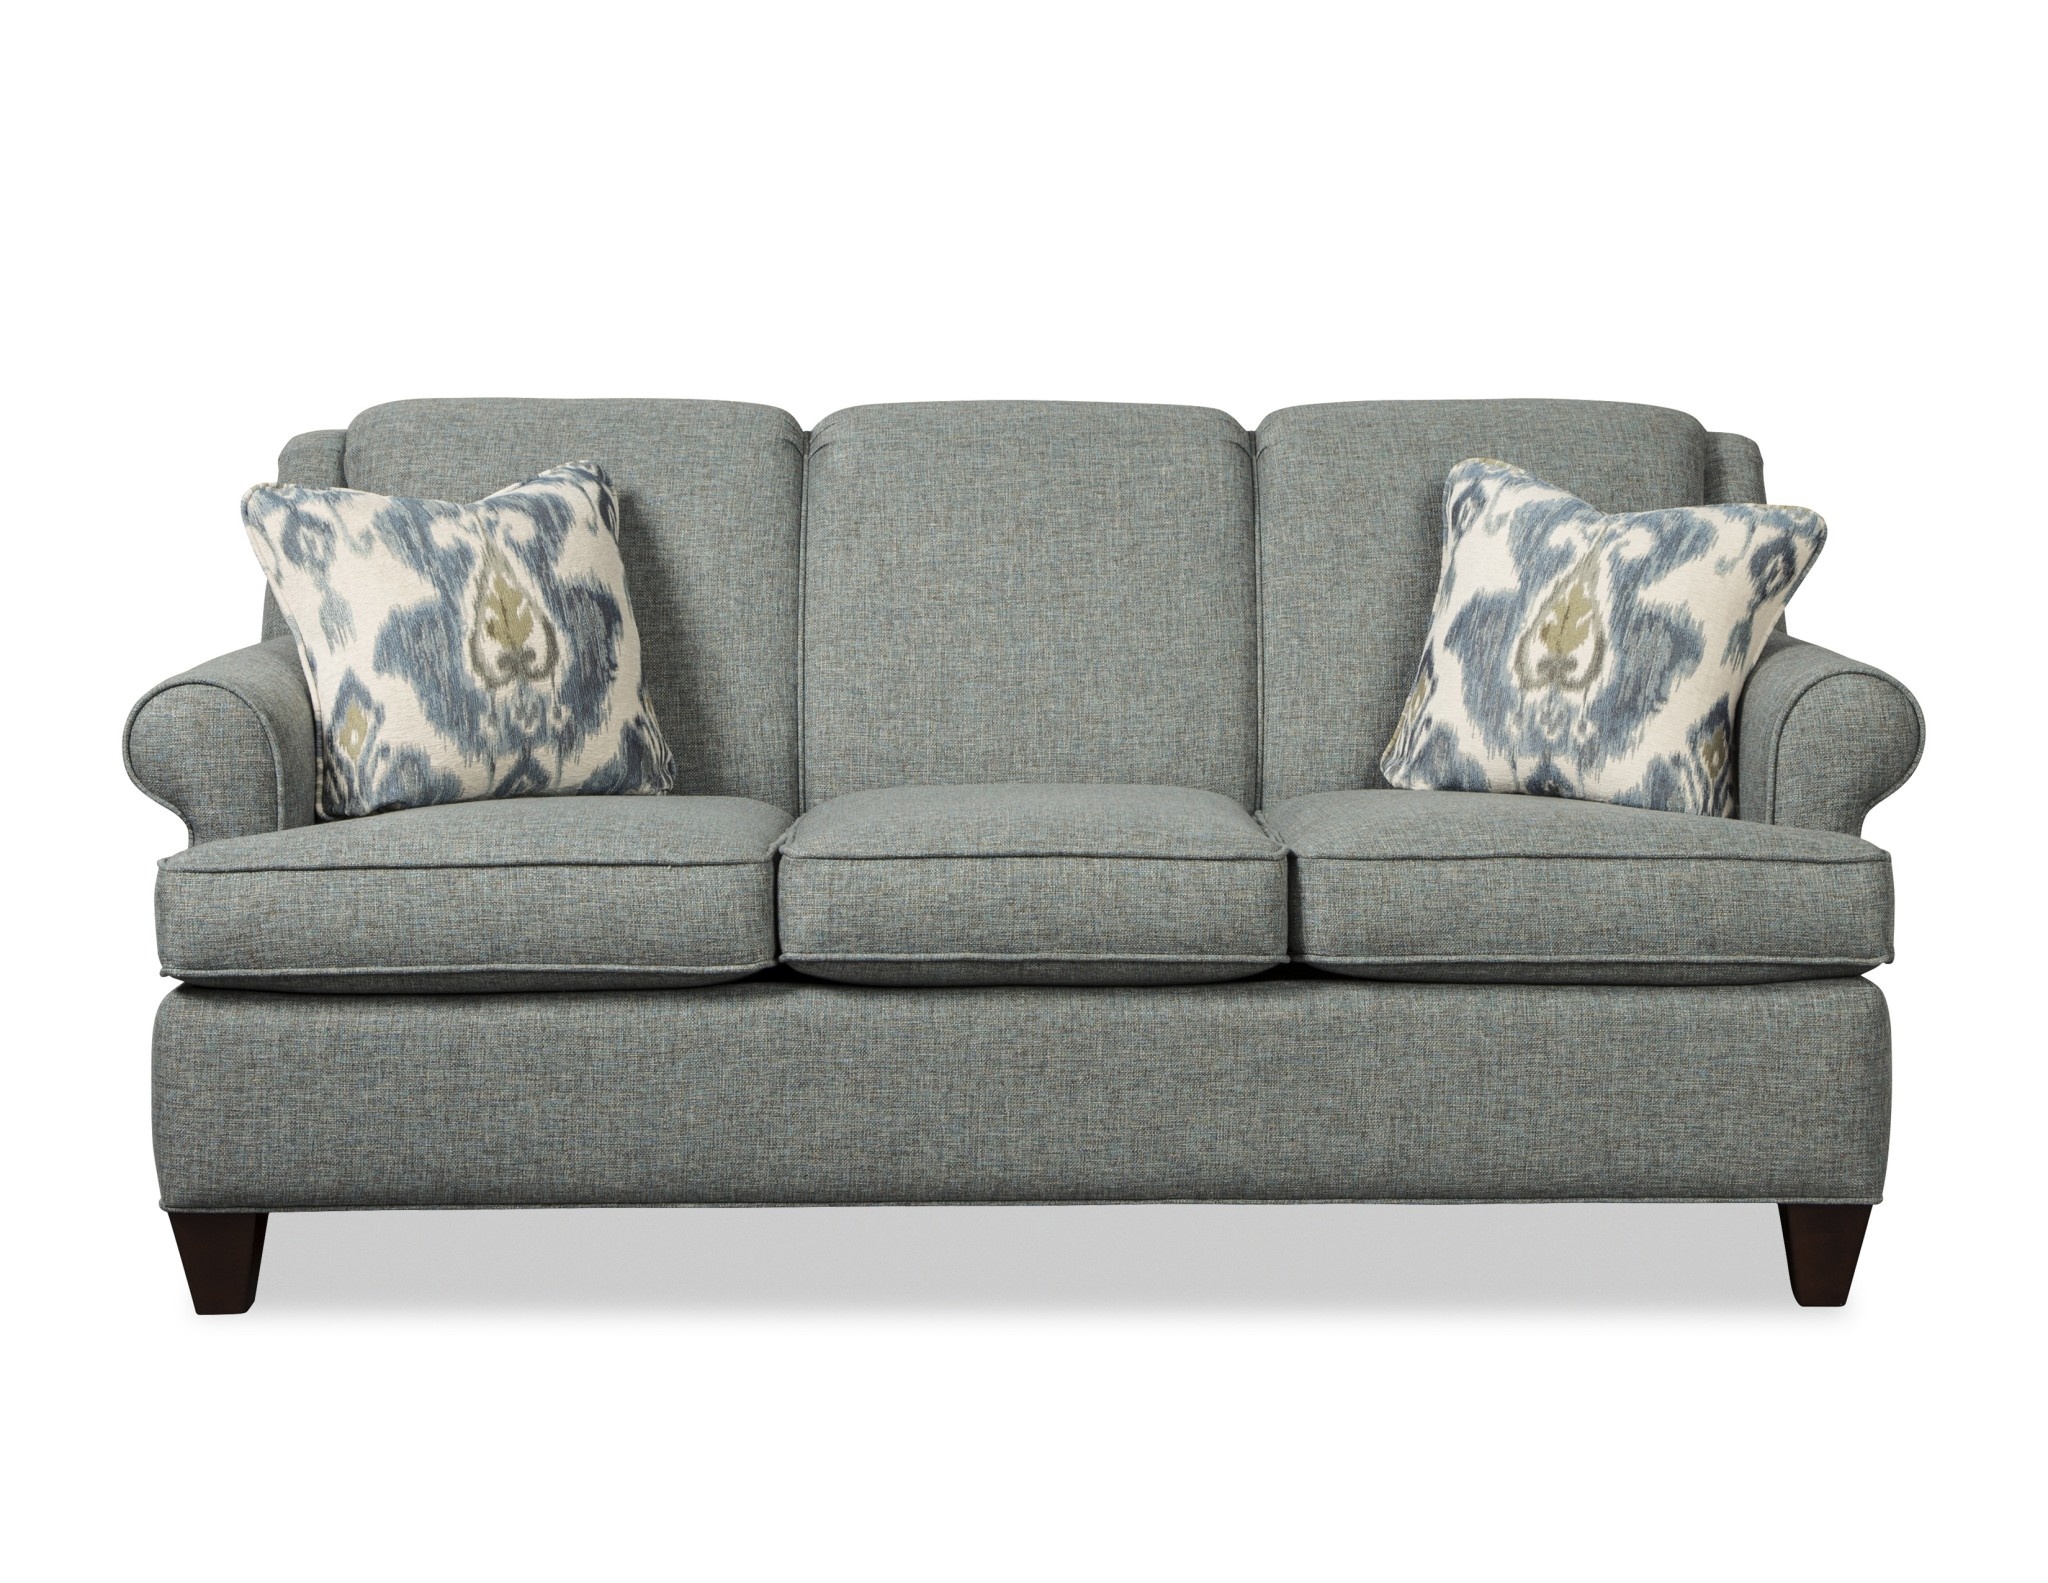 Craftmaster Furniture 7818 Sofa